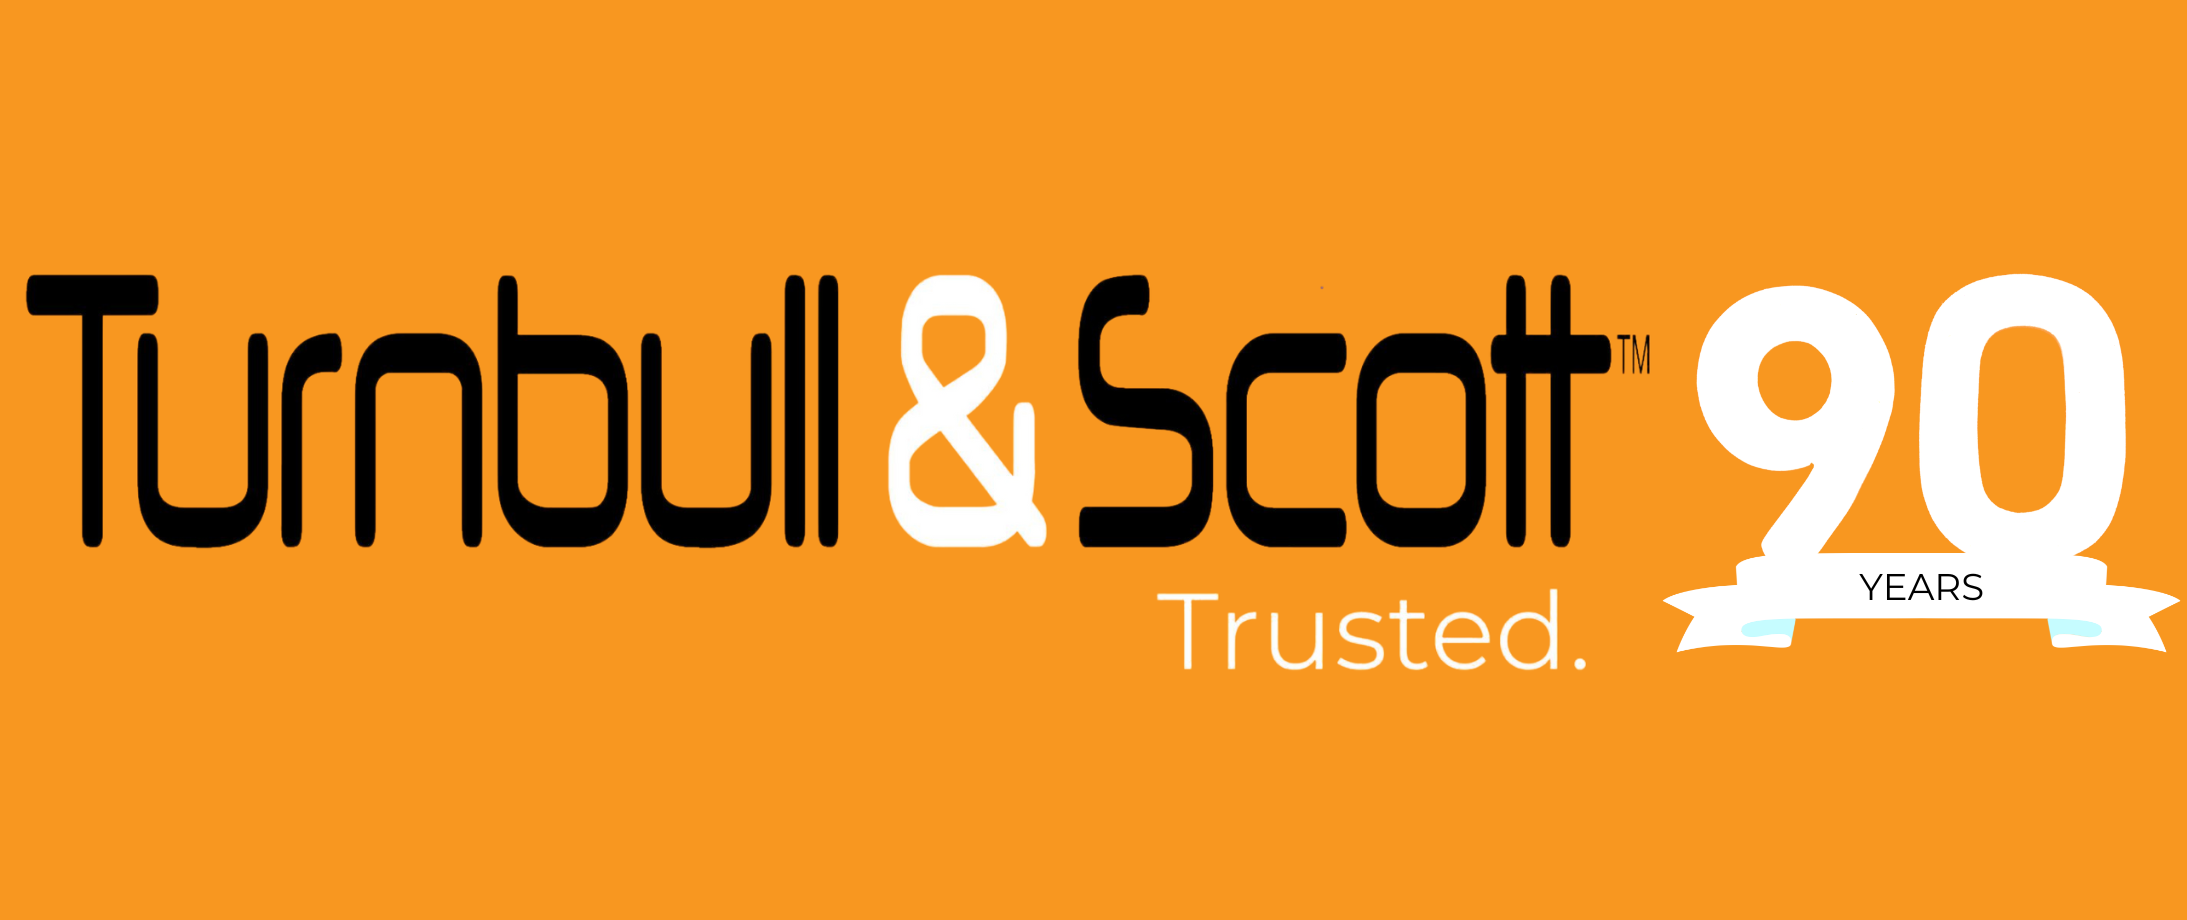 Turnbull Scott Logo